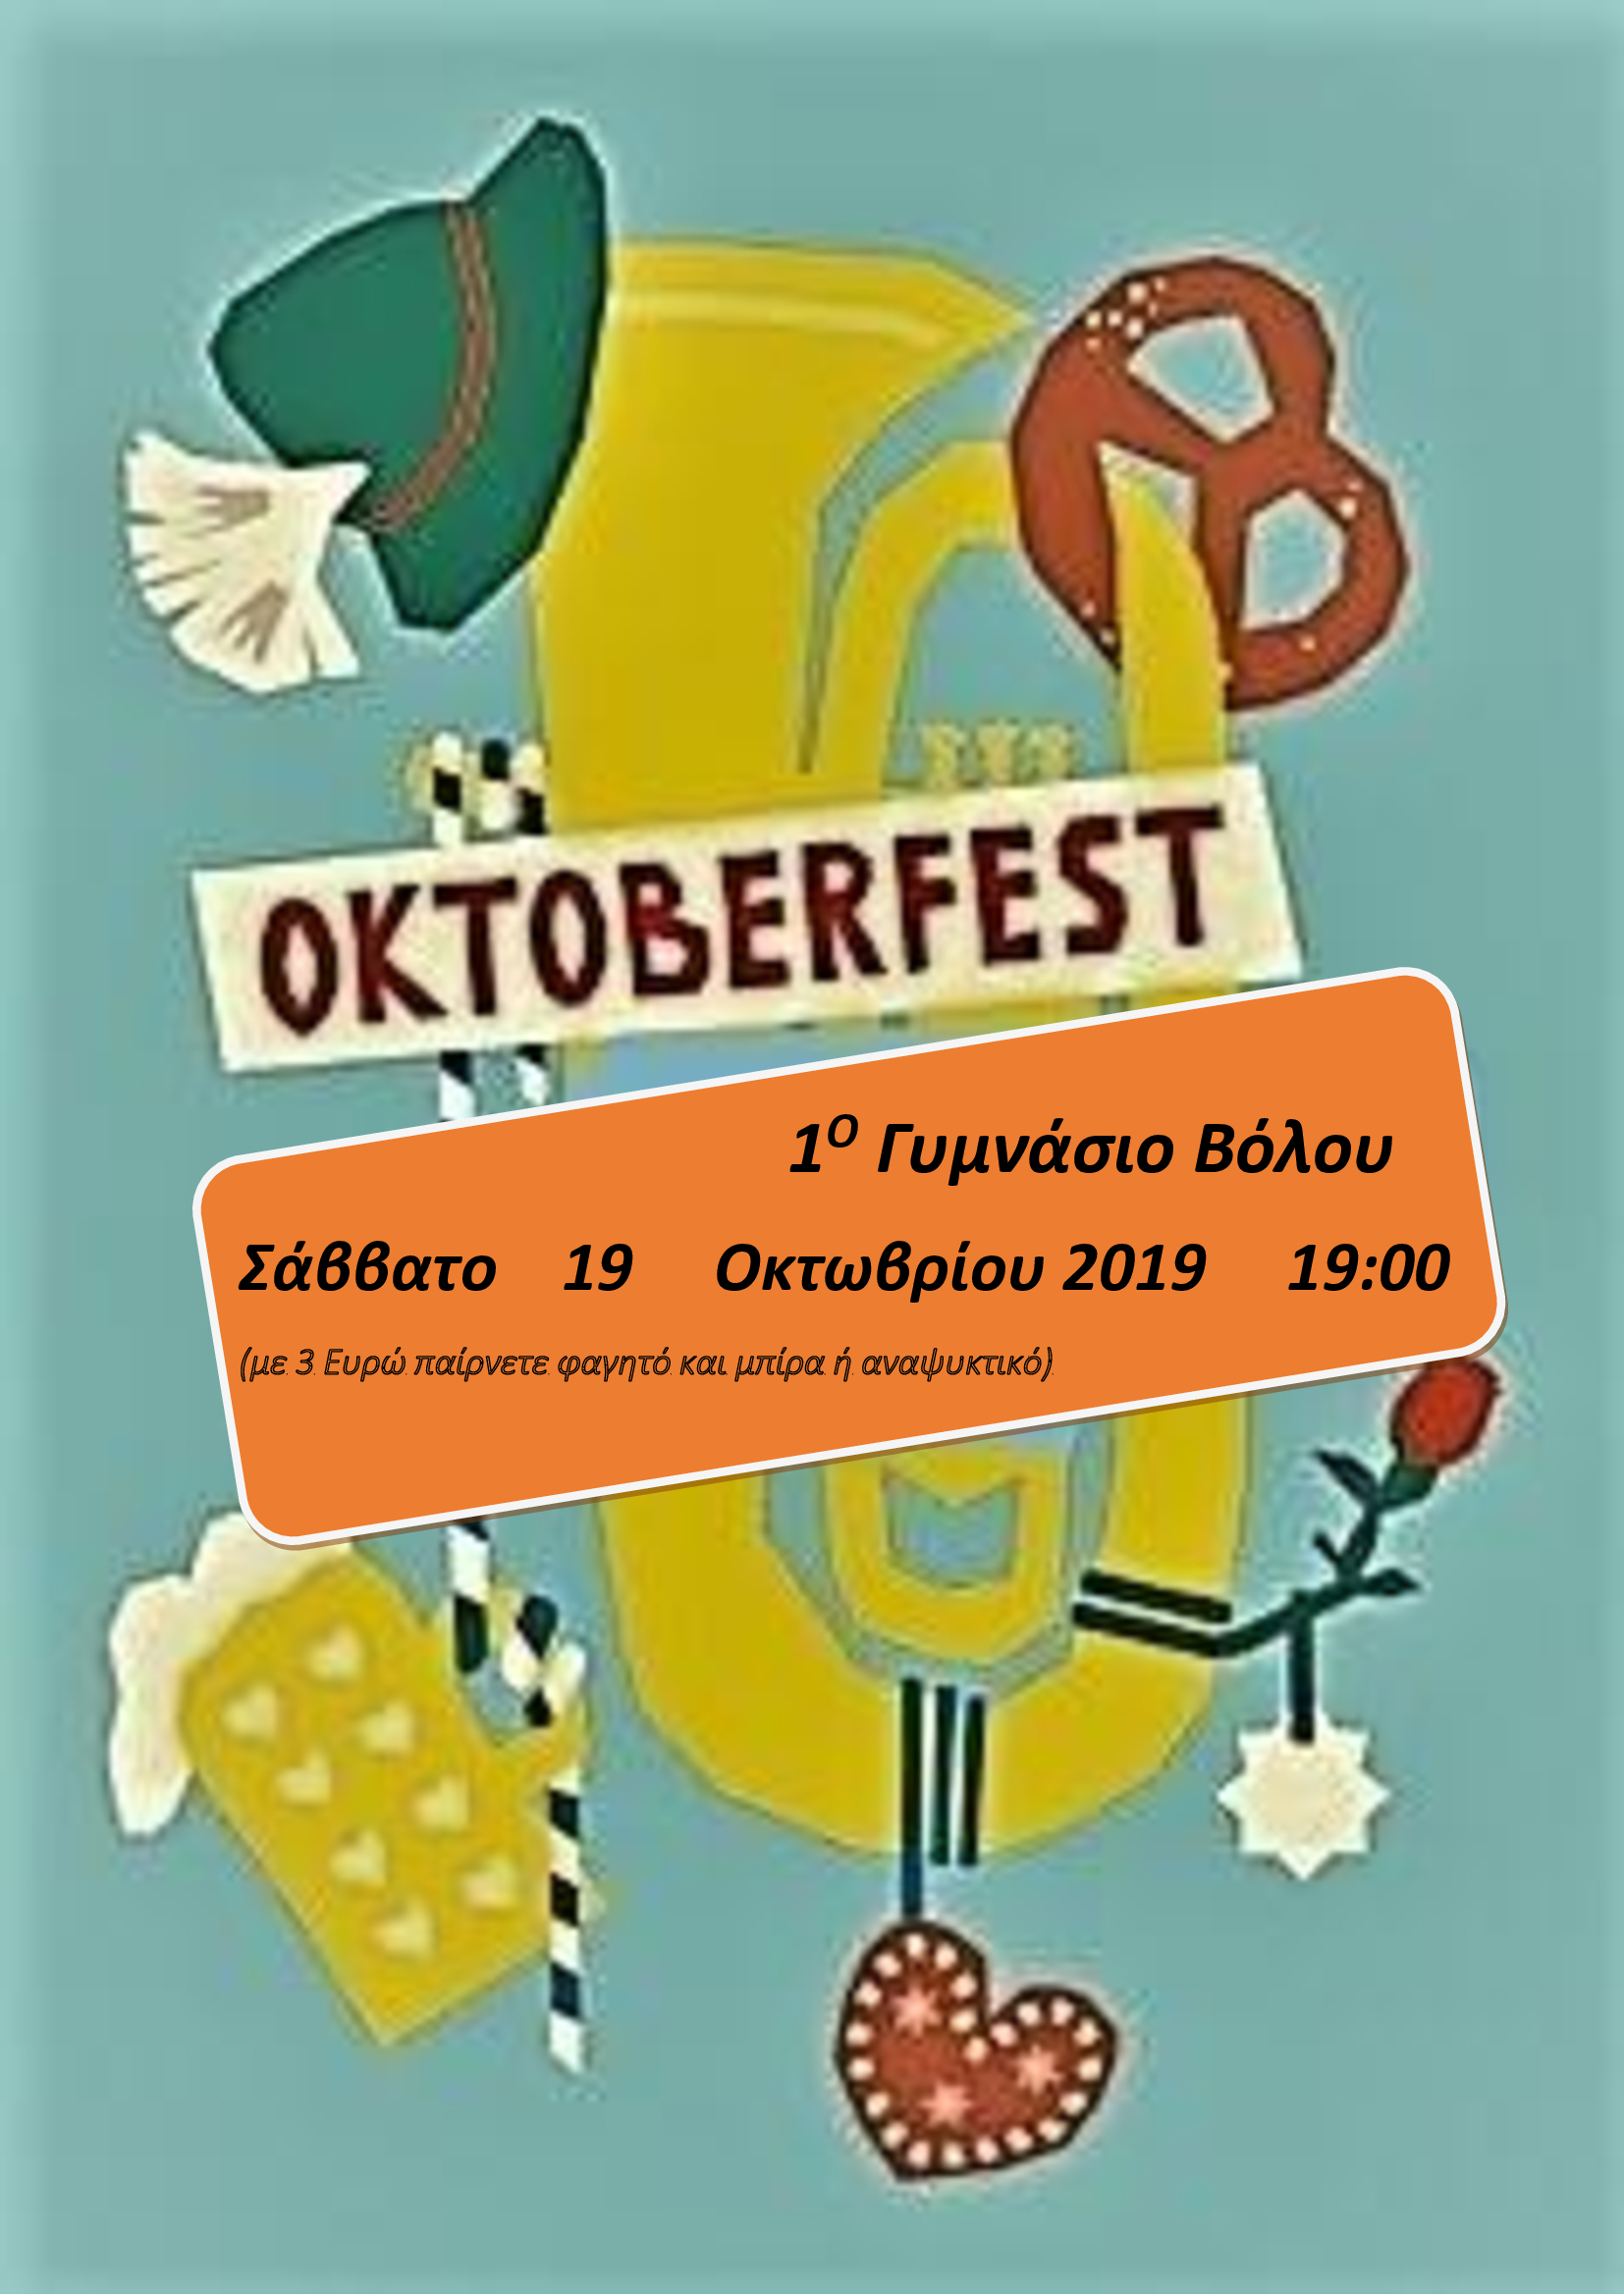 Oktoberfest poster 2019